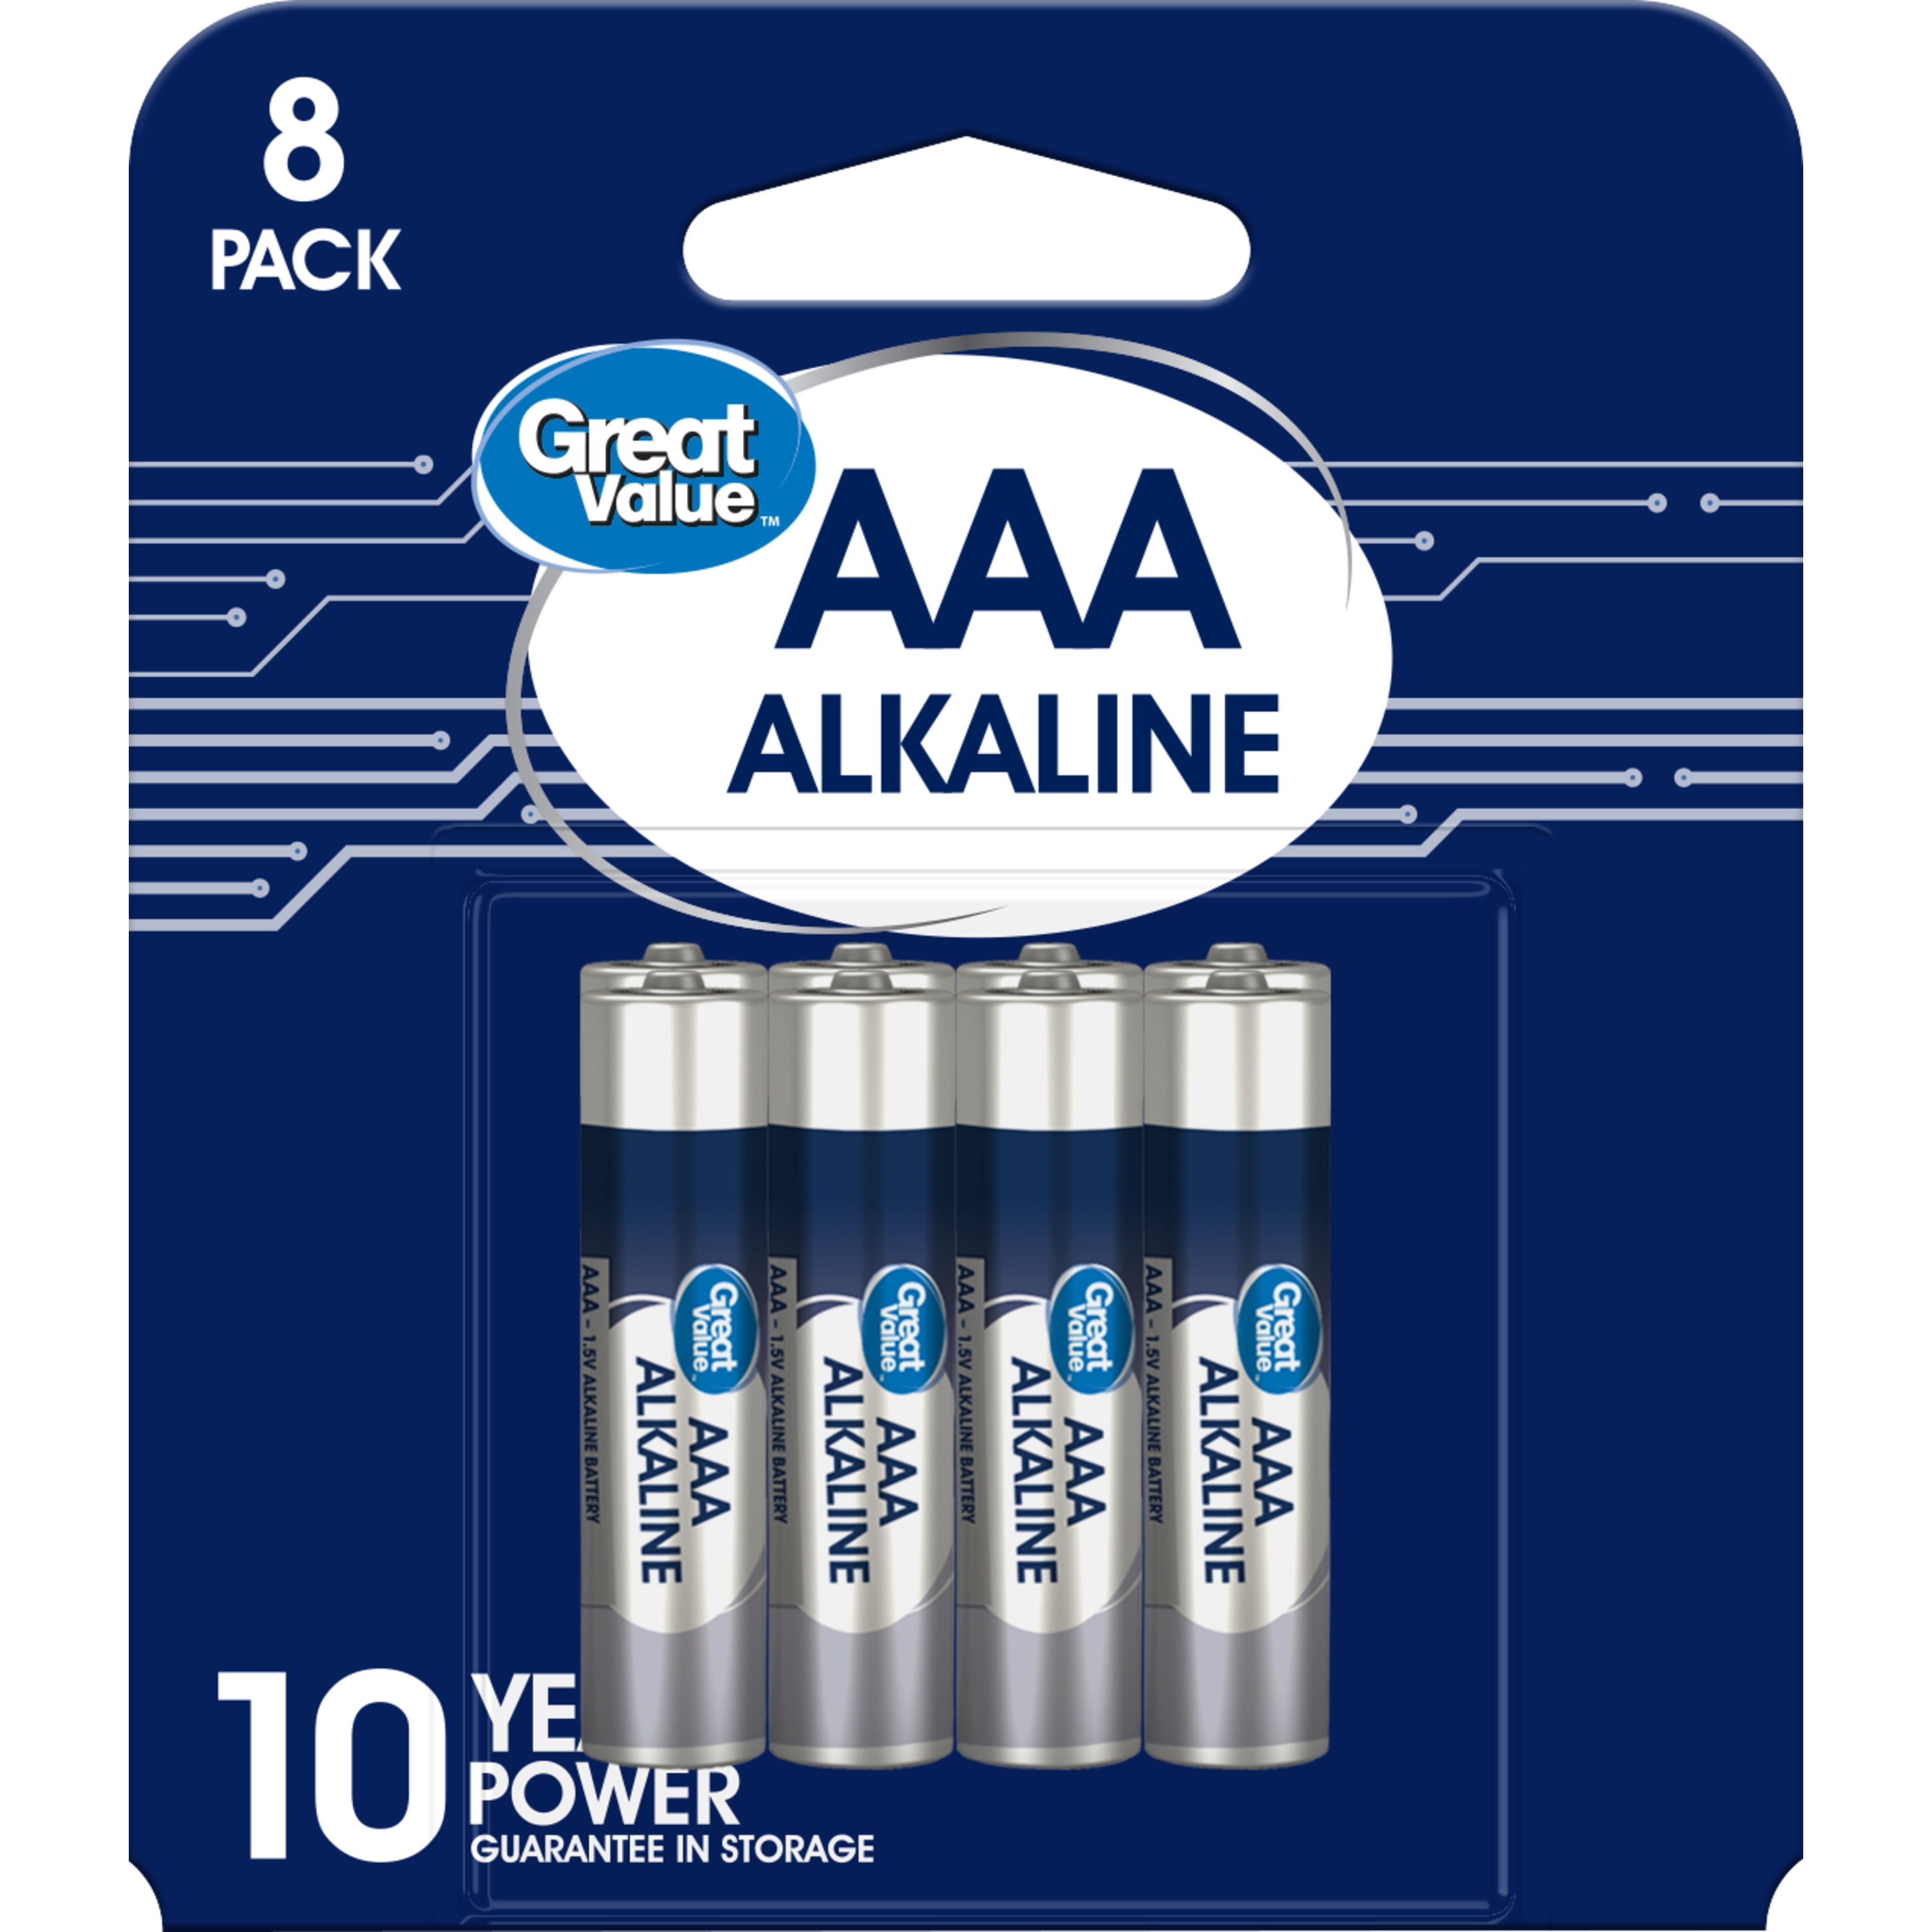 Great Value Alkaline AAA Batteries (8 Pack)